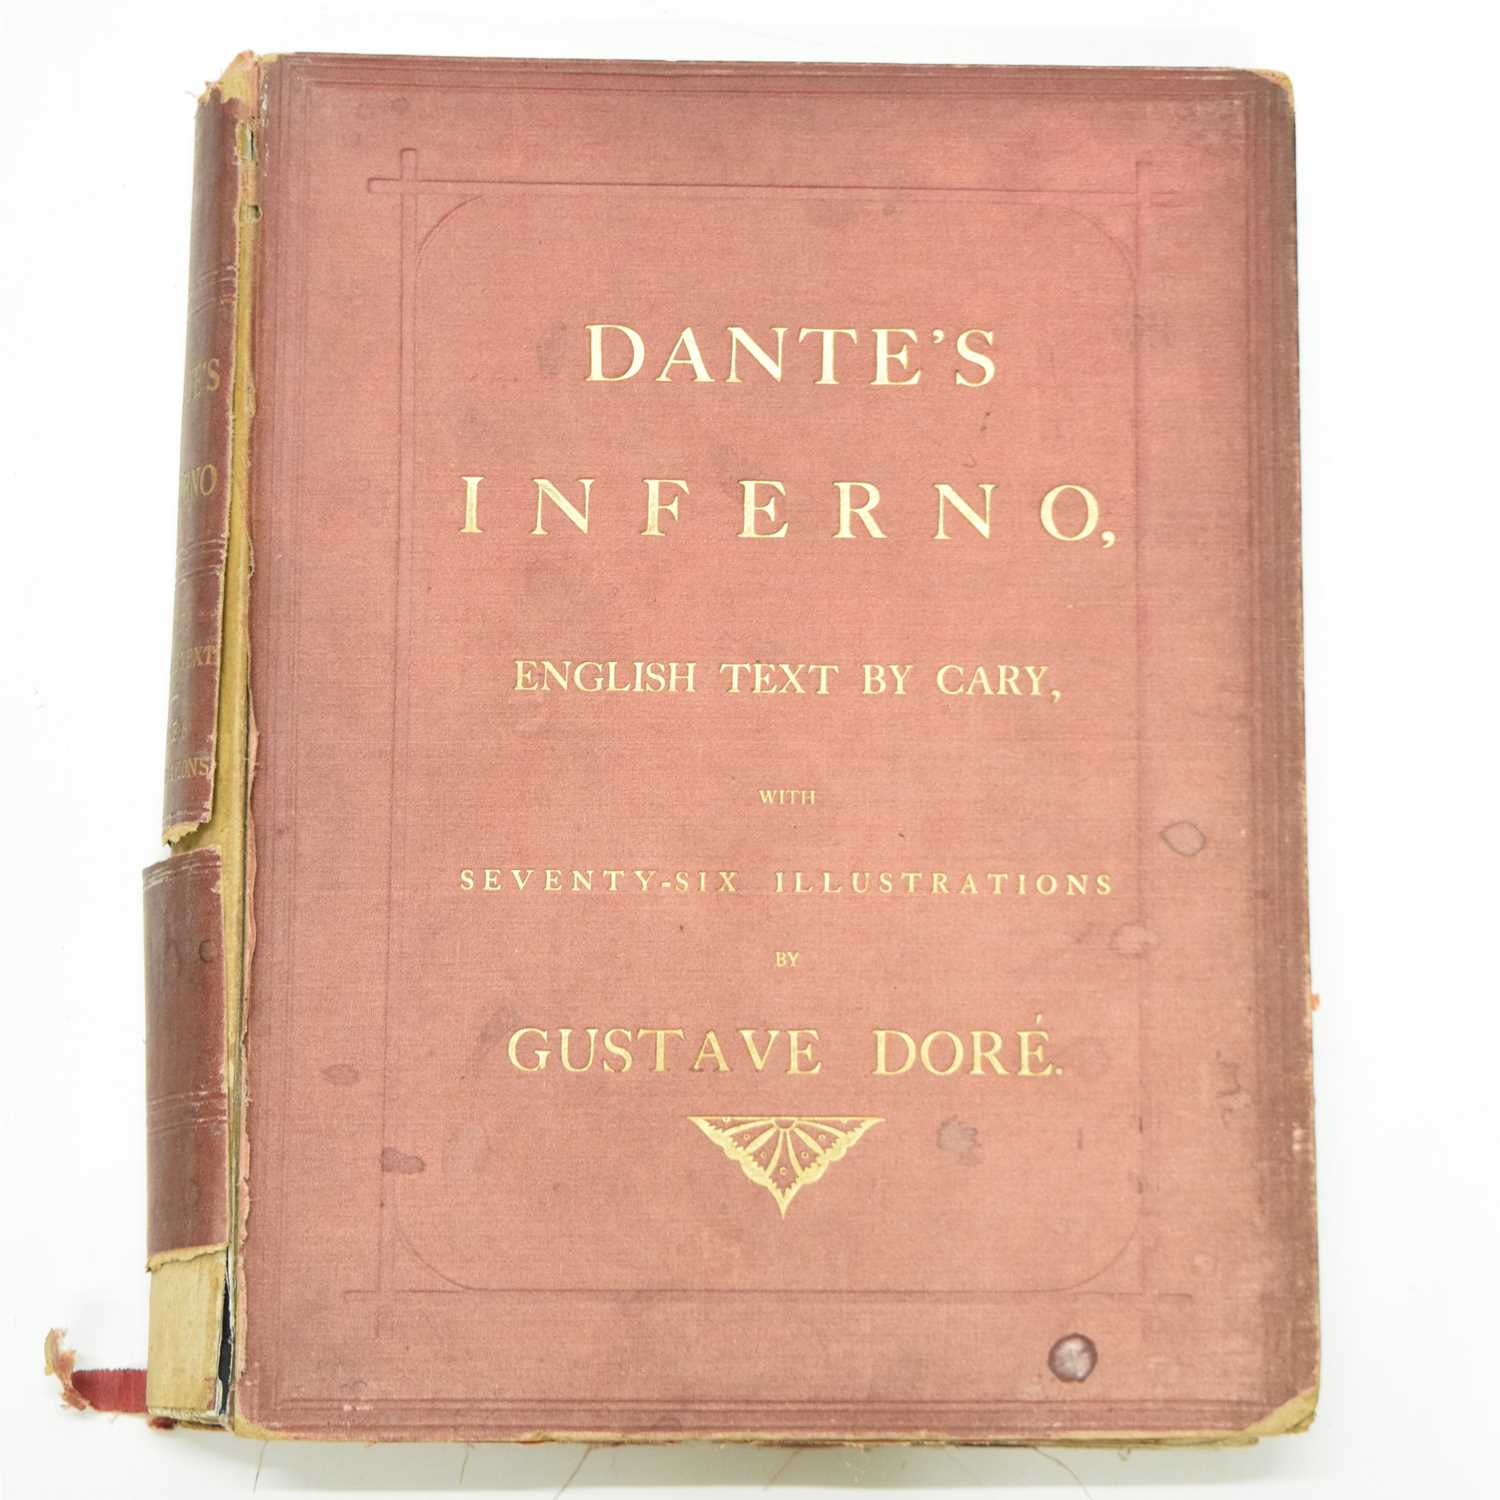 Dante Alighieri, The Vision of Hell (Inferno)